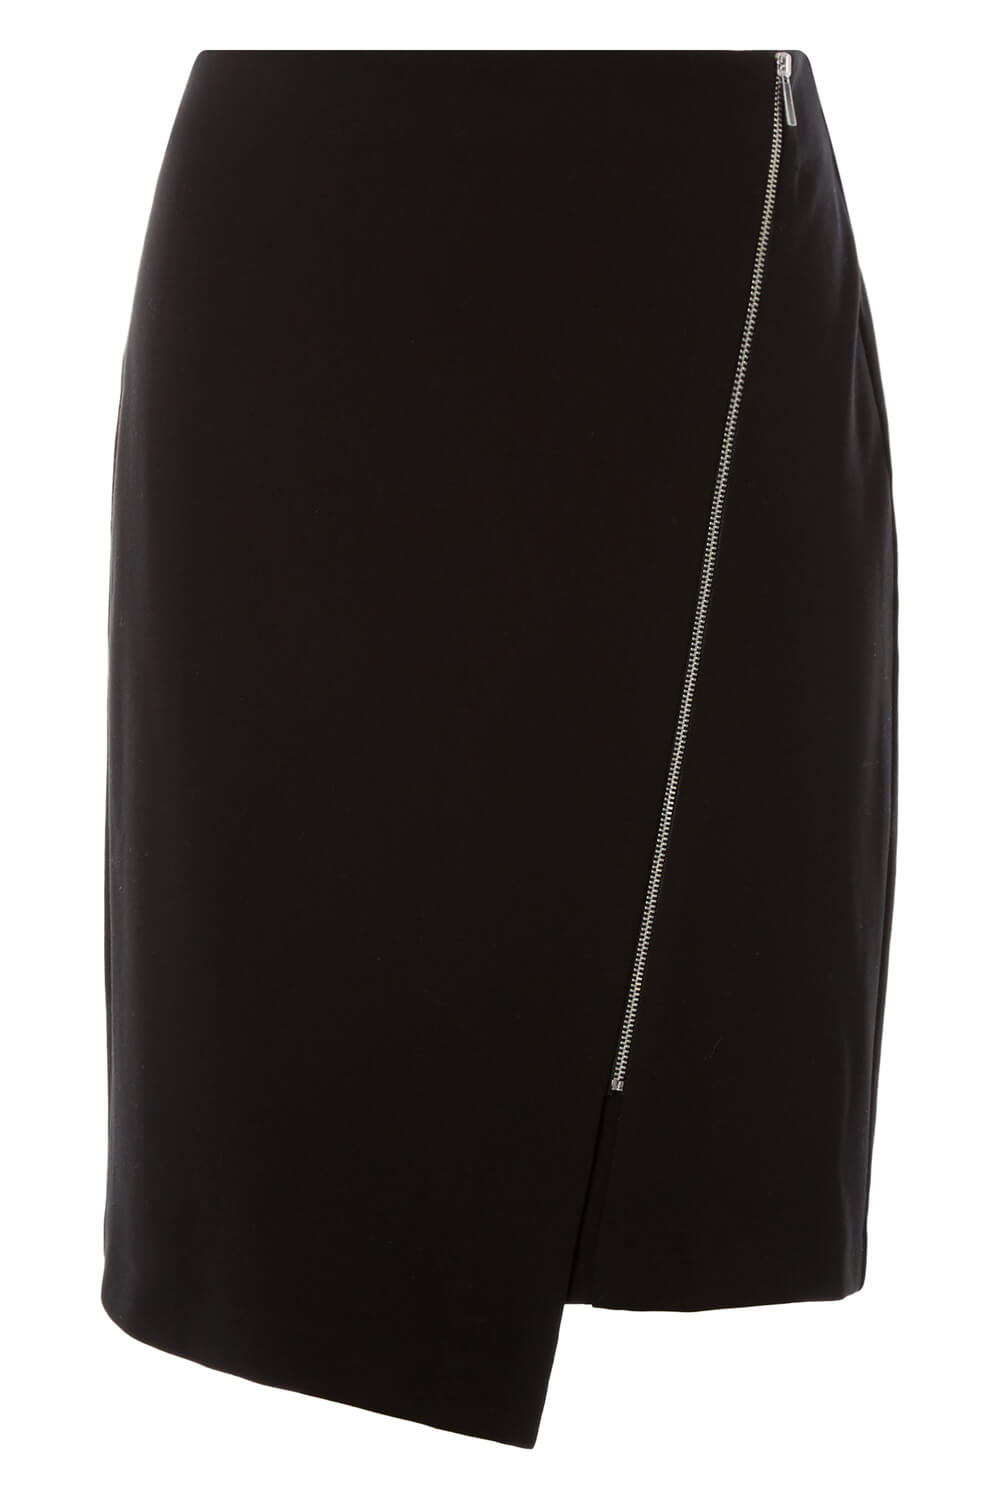 Black Zip Detail Skirt, Image 4 of 4